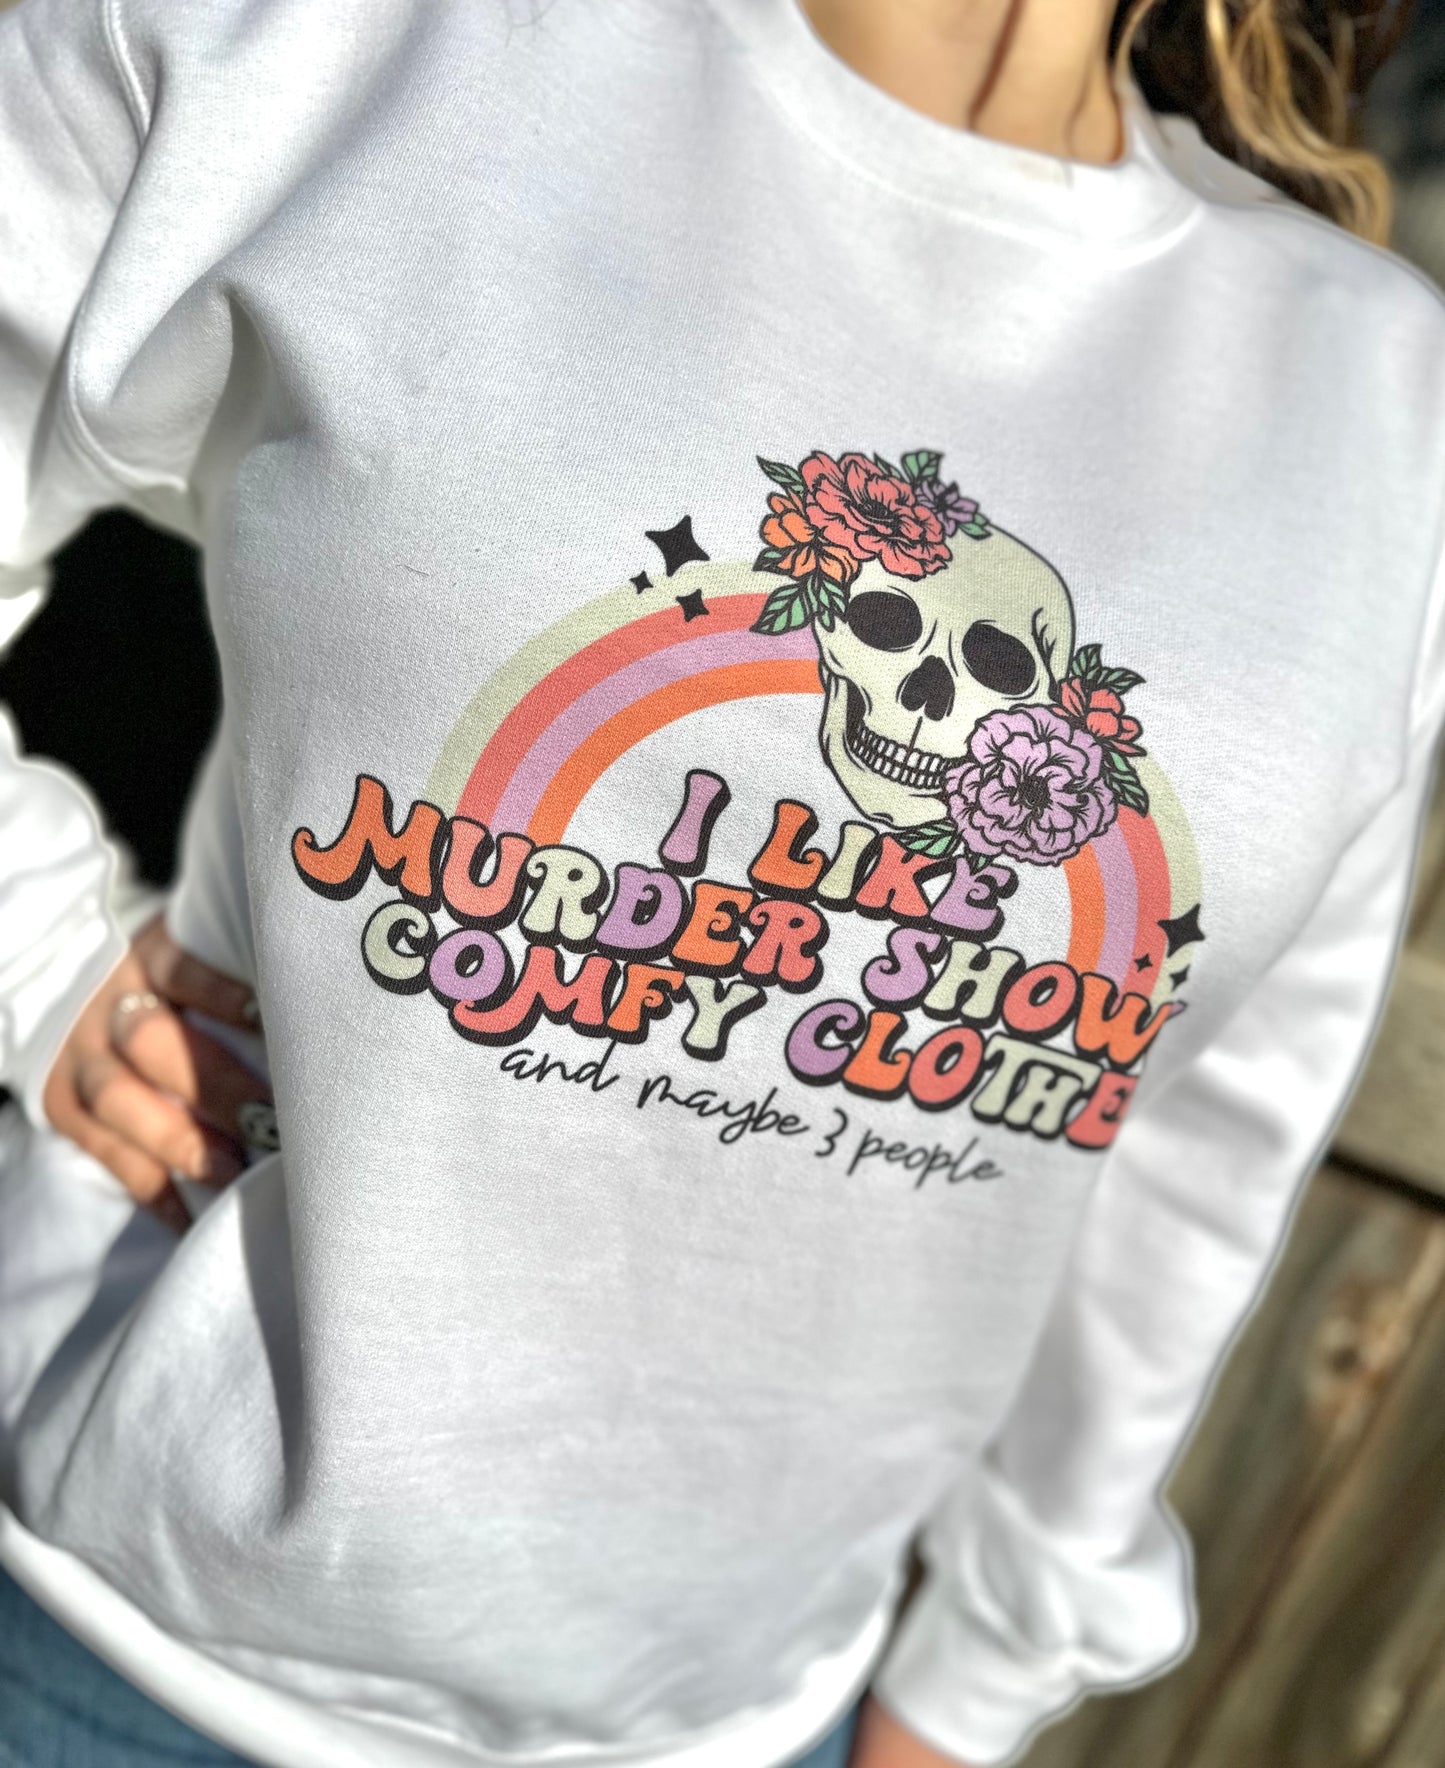 I Like Murder Shows Comfy Clothes Sweatshirt